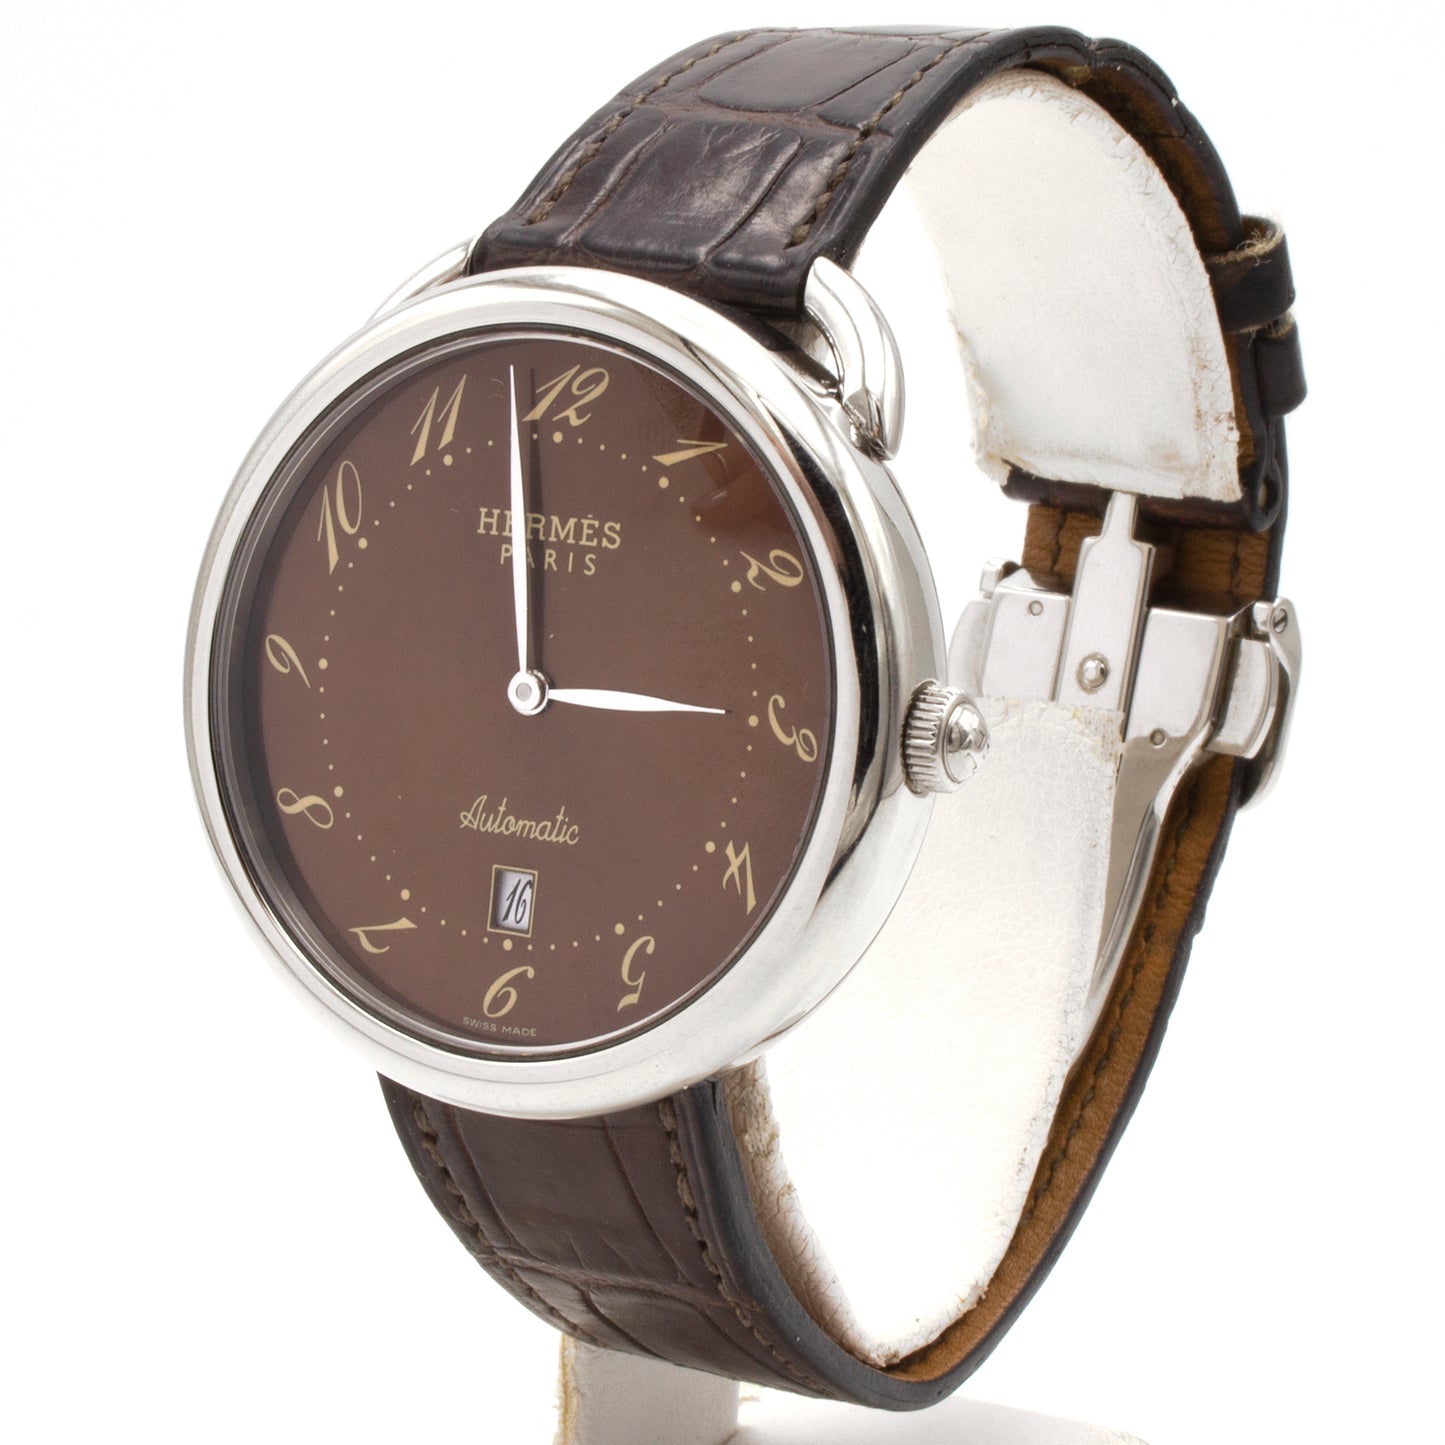 Hermès Arceau AR4.810 watch